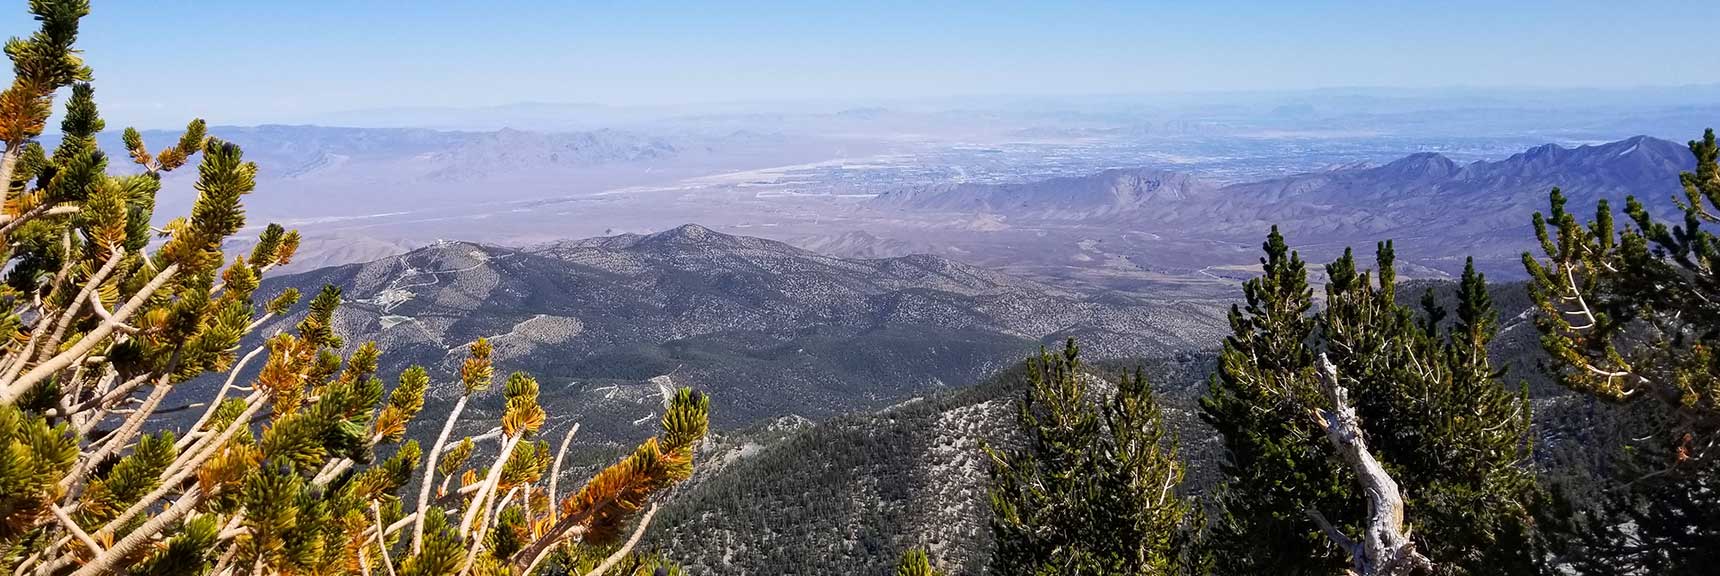 View from Mummy Mt Summit, Nevada